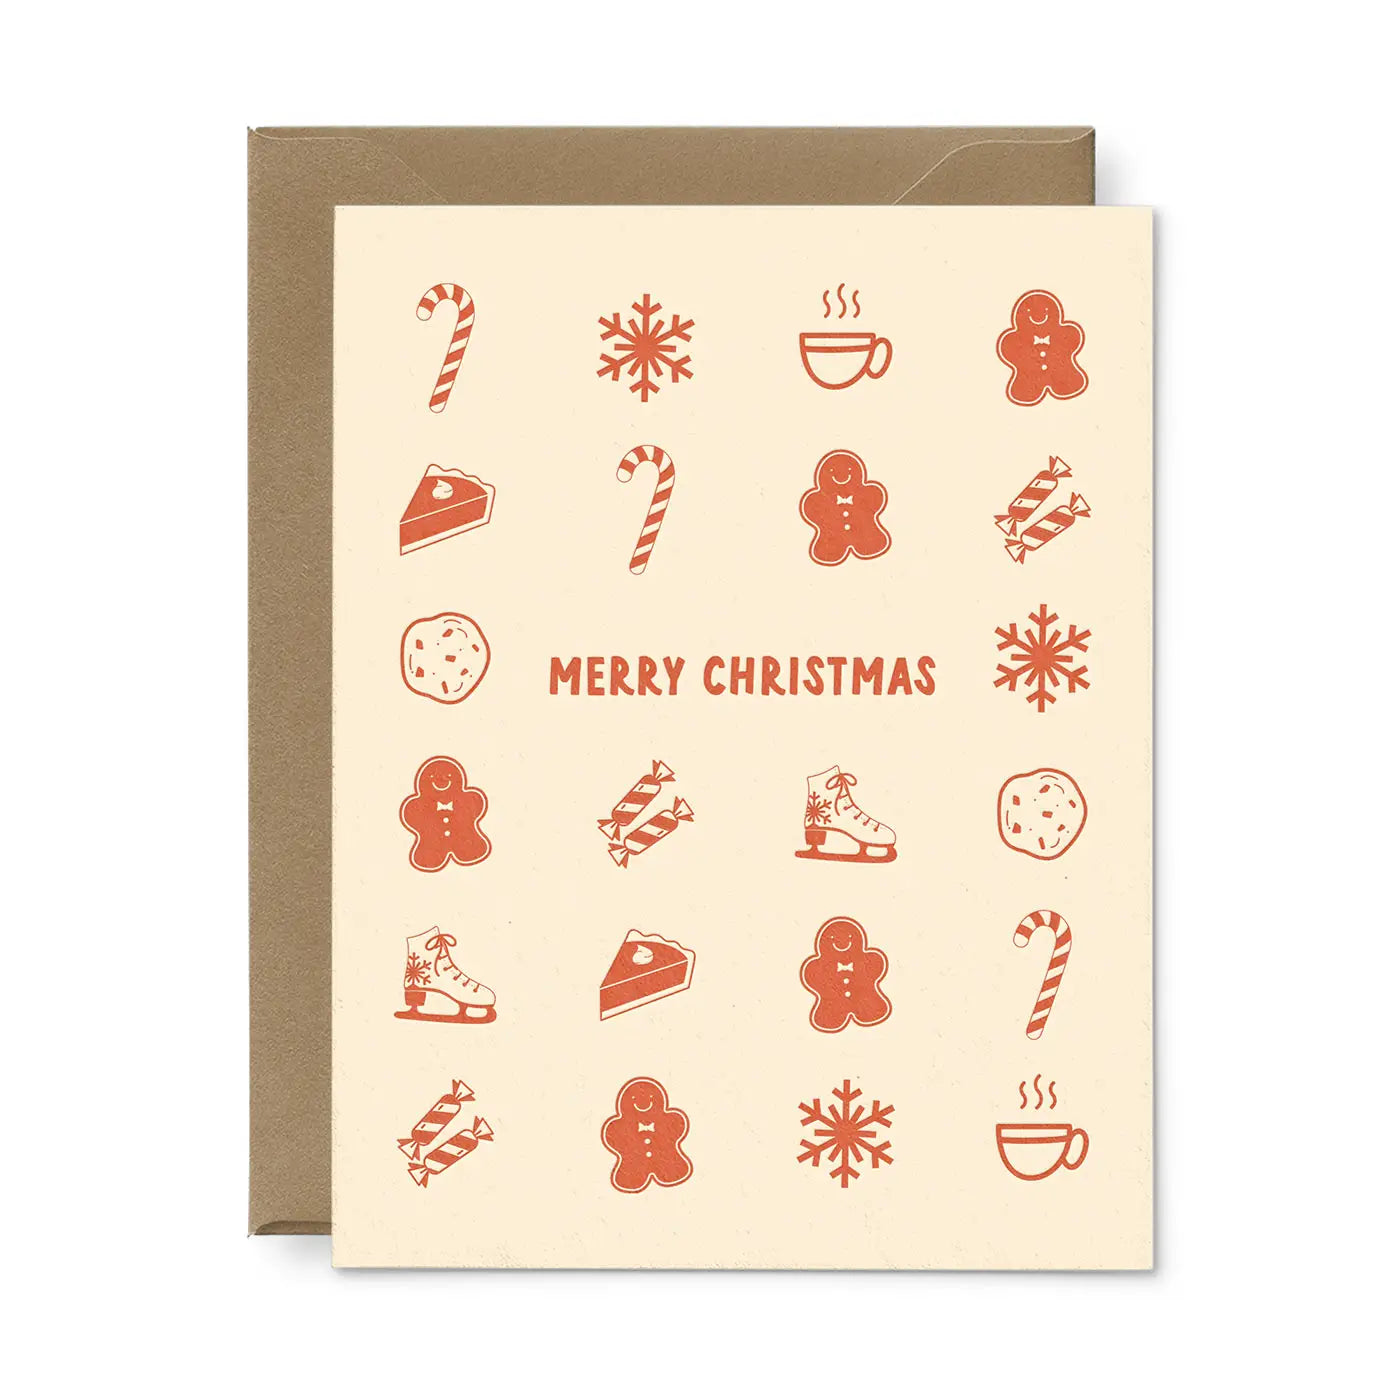 Merry Christmas Grid Greeting Card